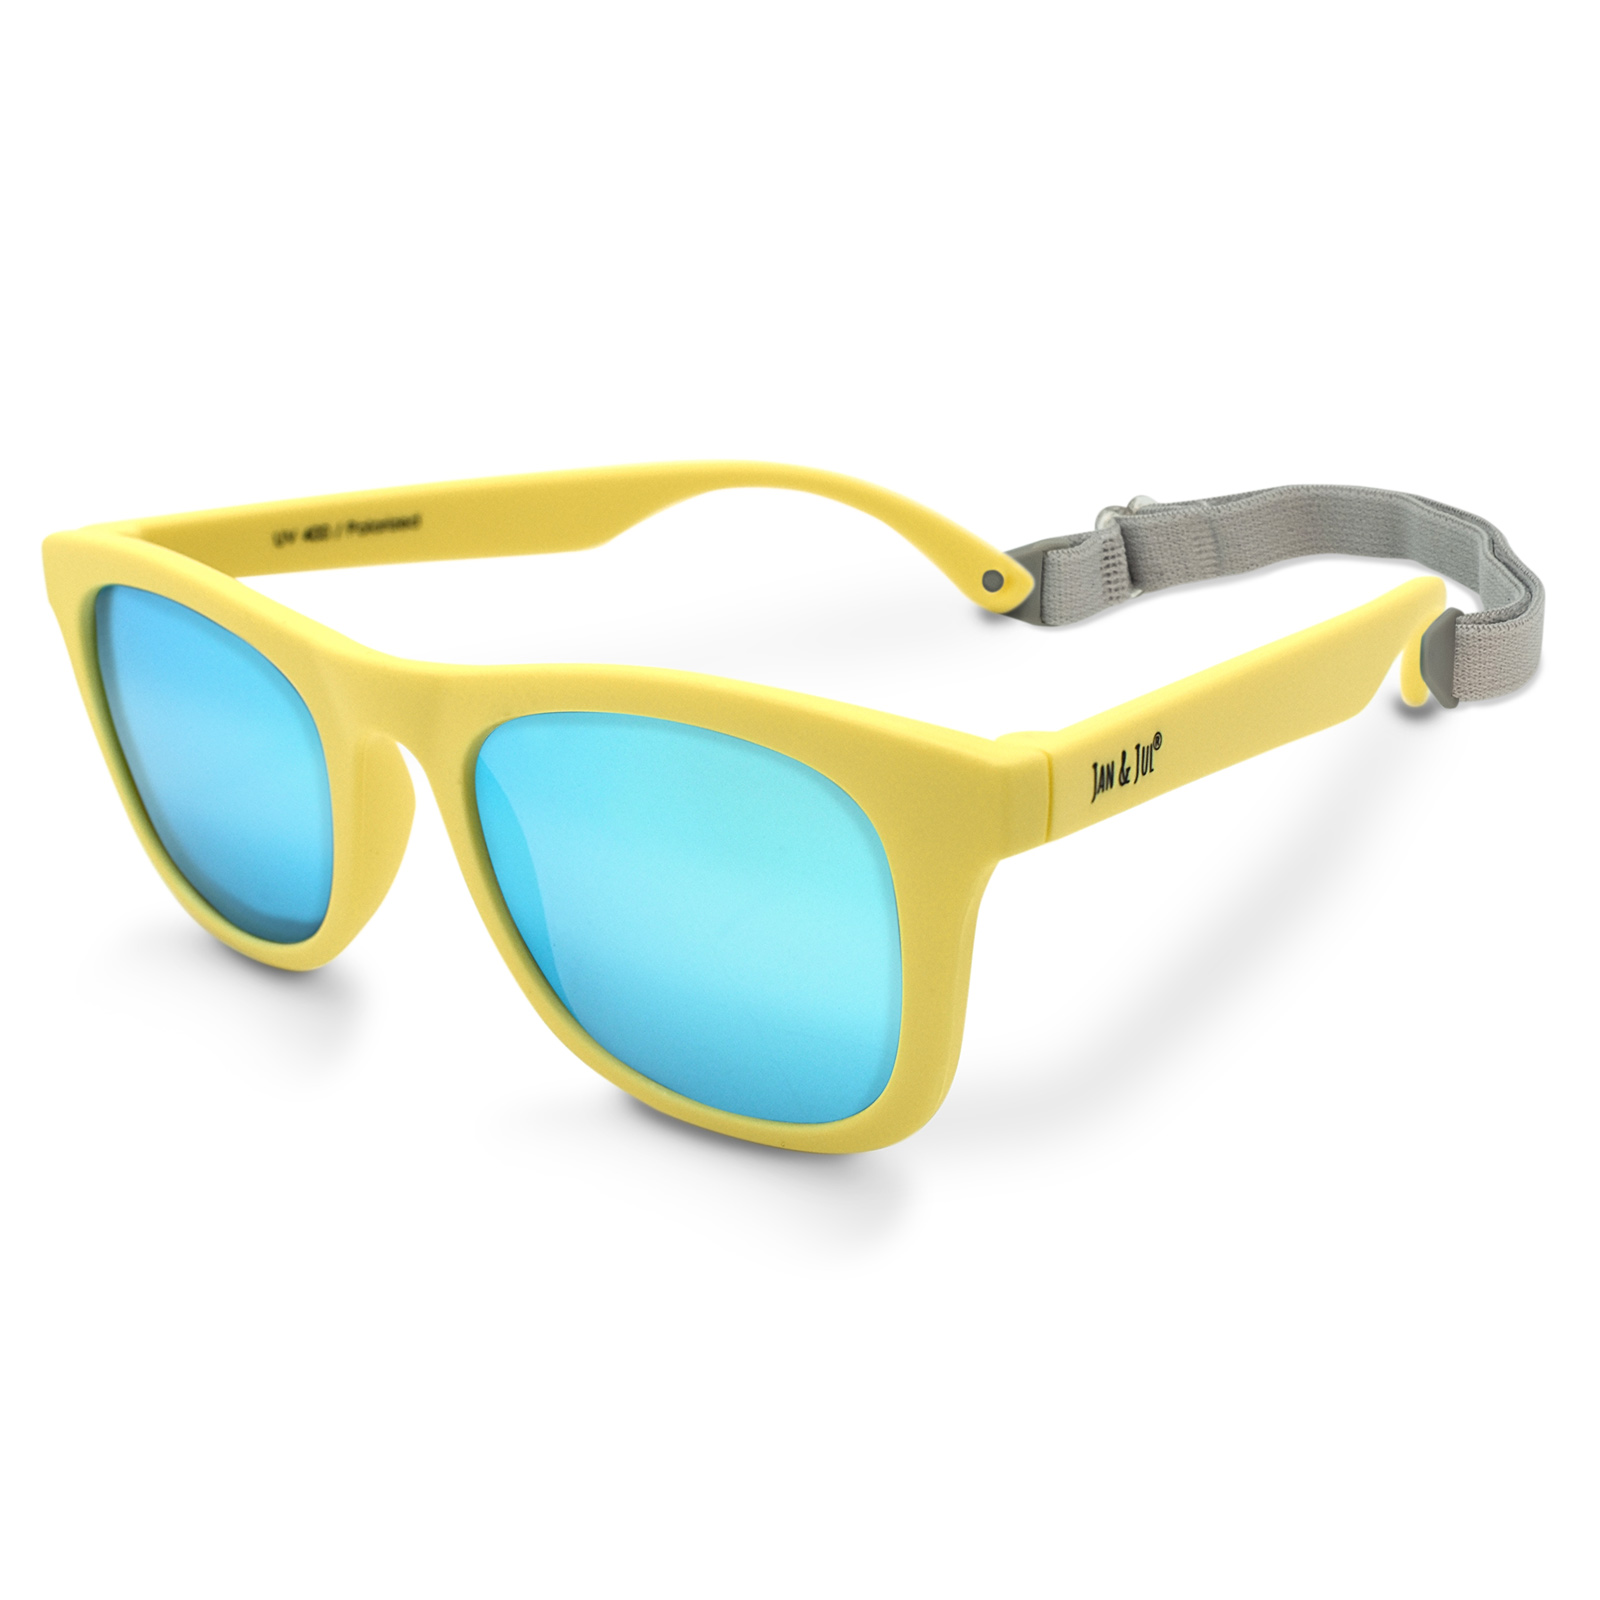 Jan & Jul Infant Sunglasses with Strap, Polarized UV400 Protection (S: 6 Months -2 Years, Lemonade Aurora) - image 1 of 3